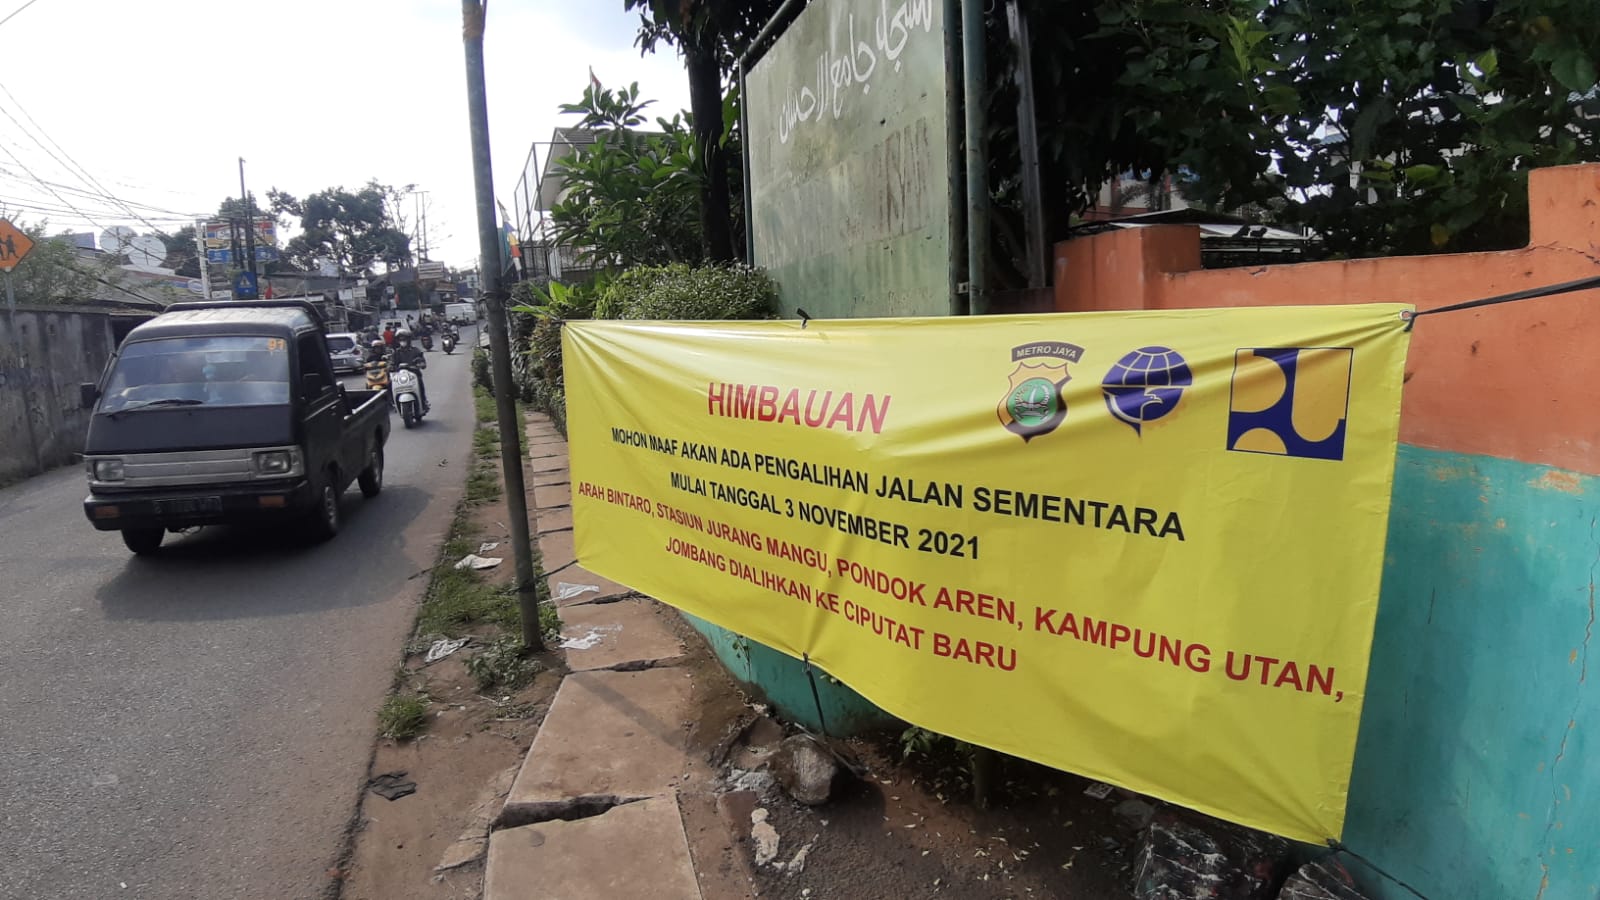 Gorong-gorong yang berlokasi di Jalan Ki Hajar Dewantara, Sawah Lama, Ciputat, Tangerang Selatan, mulai 3 November 2021 mendatang. akan segera diperbaiki.